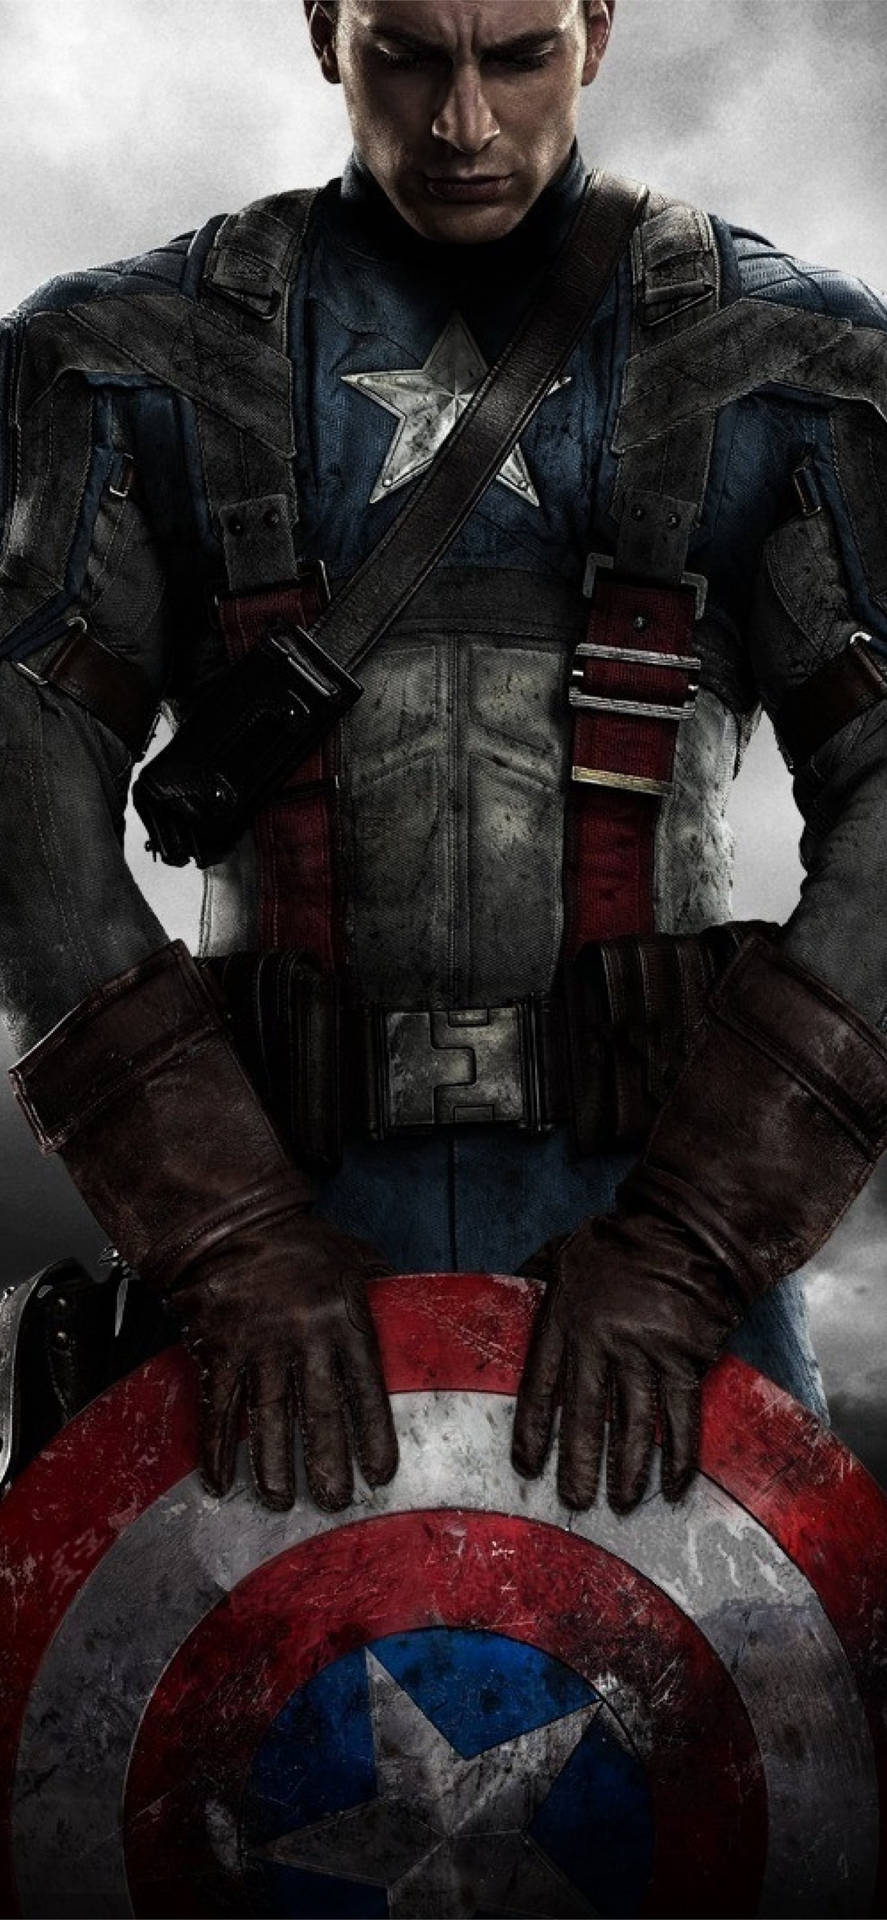 Bedste Captain America Iphone skærmsaver Wallpaper